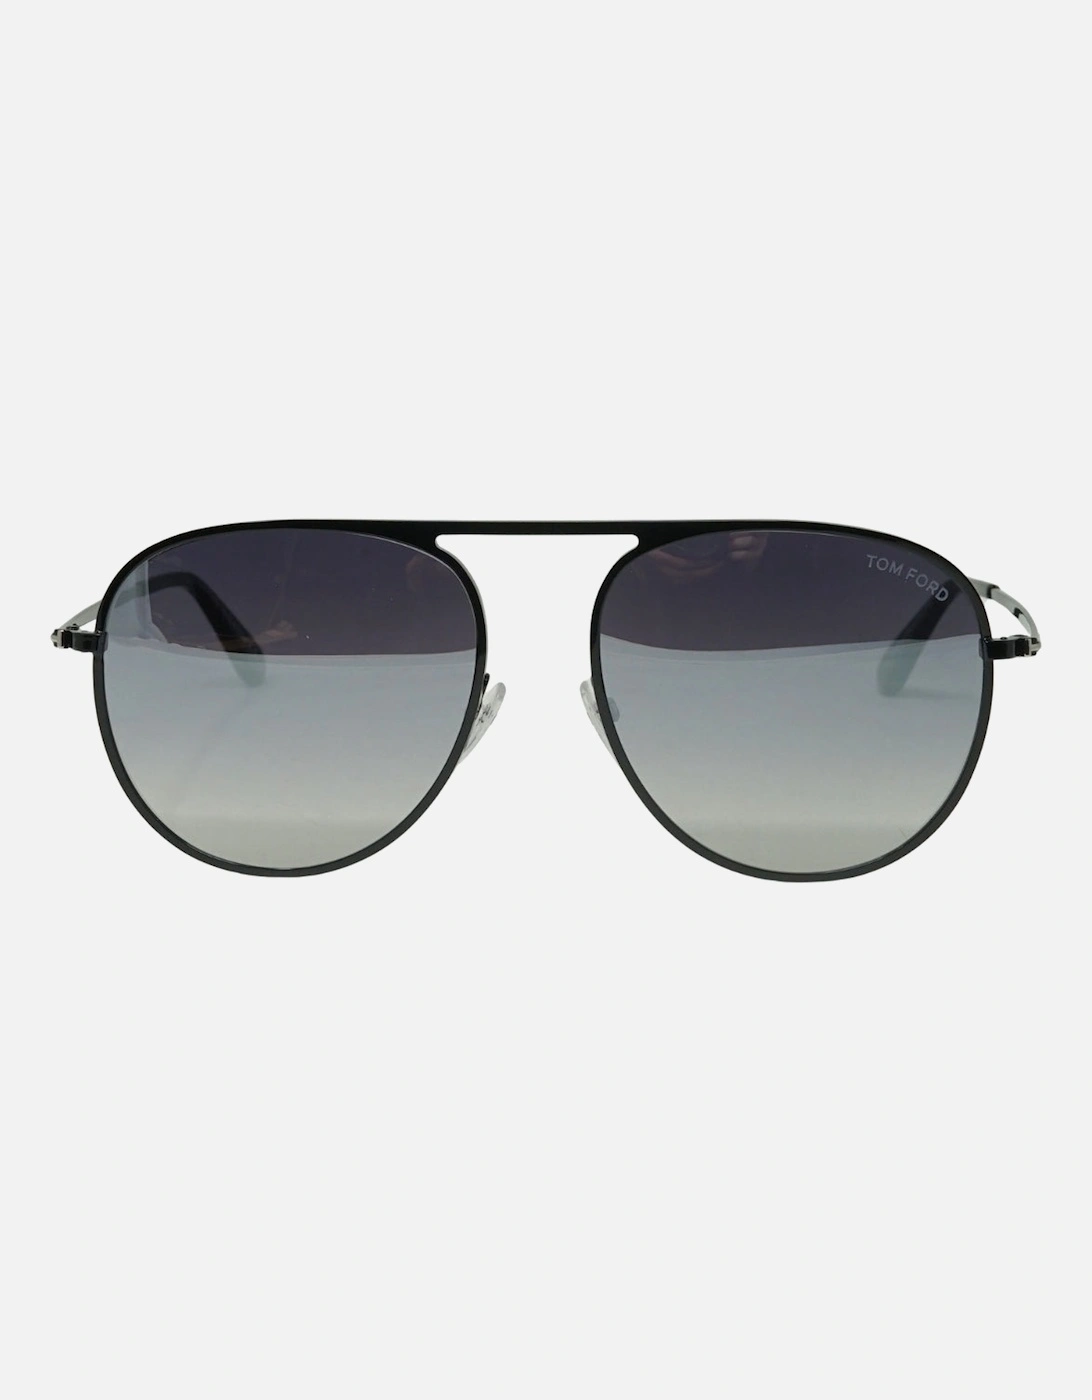 Jason-02 FT0621 01C Black Sunglasses, 4 of 3